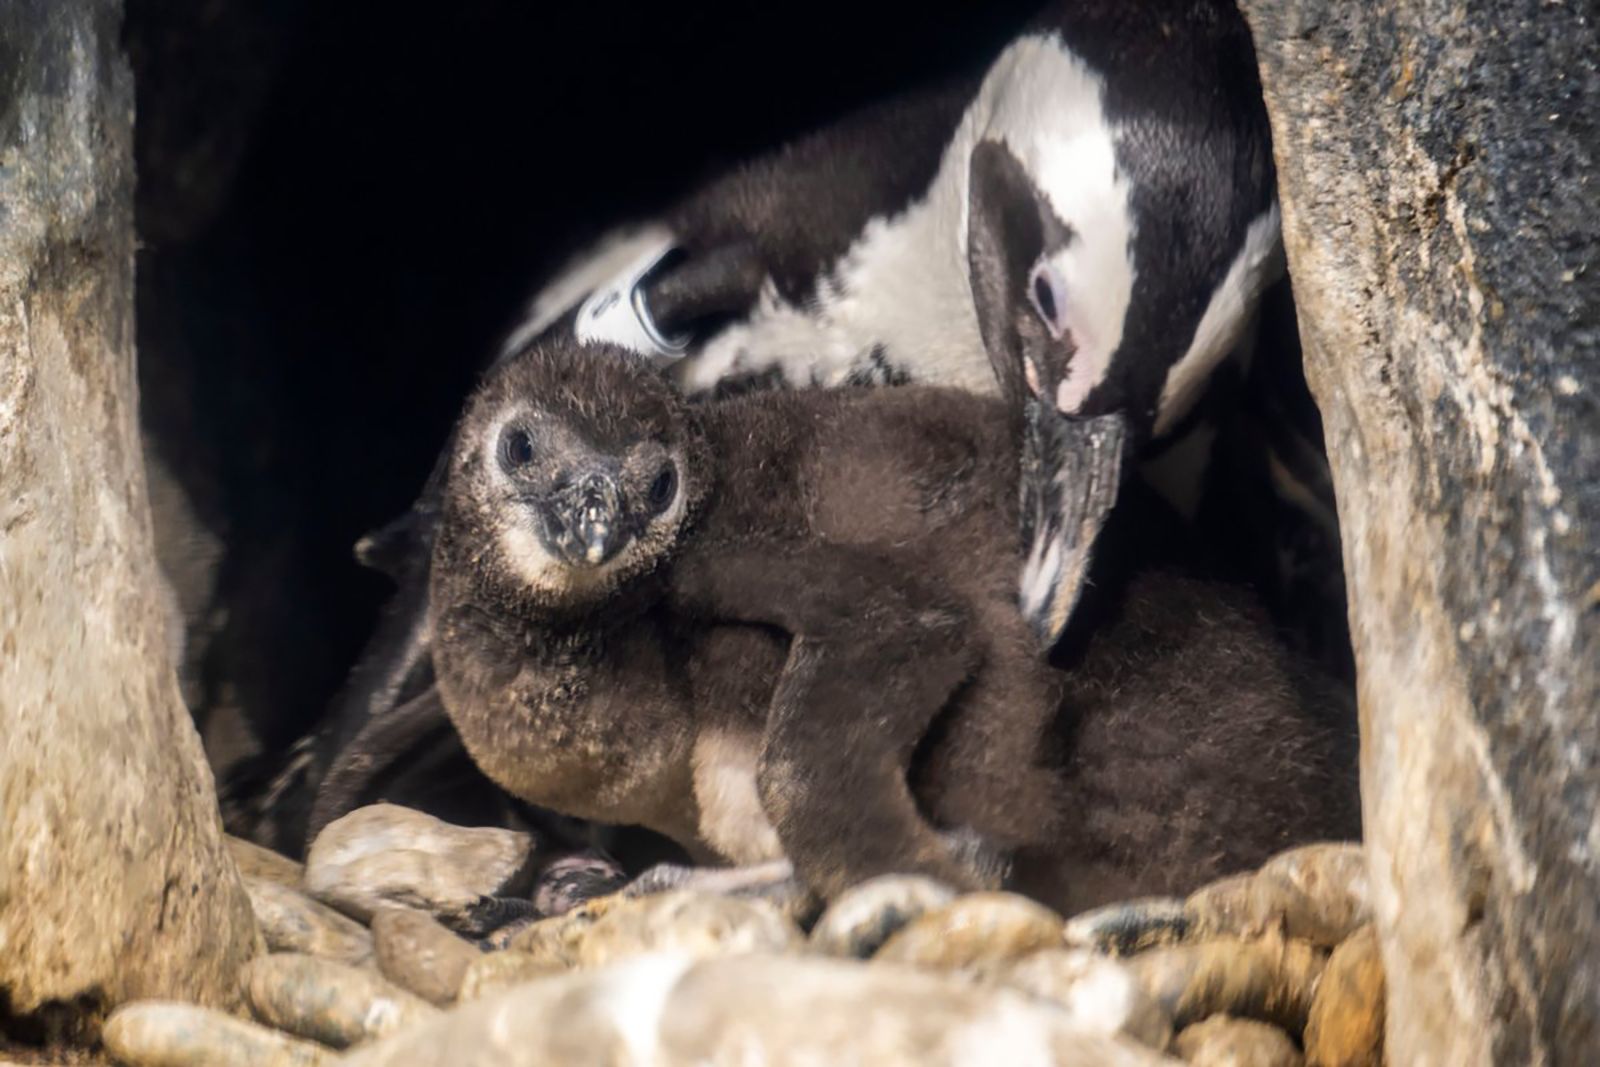 Adventure Aquarium penguins: Help name the newest chick